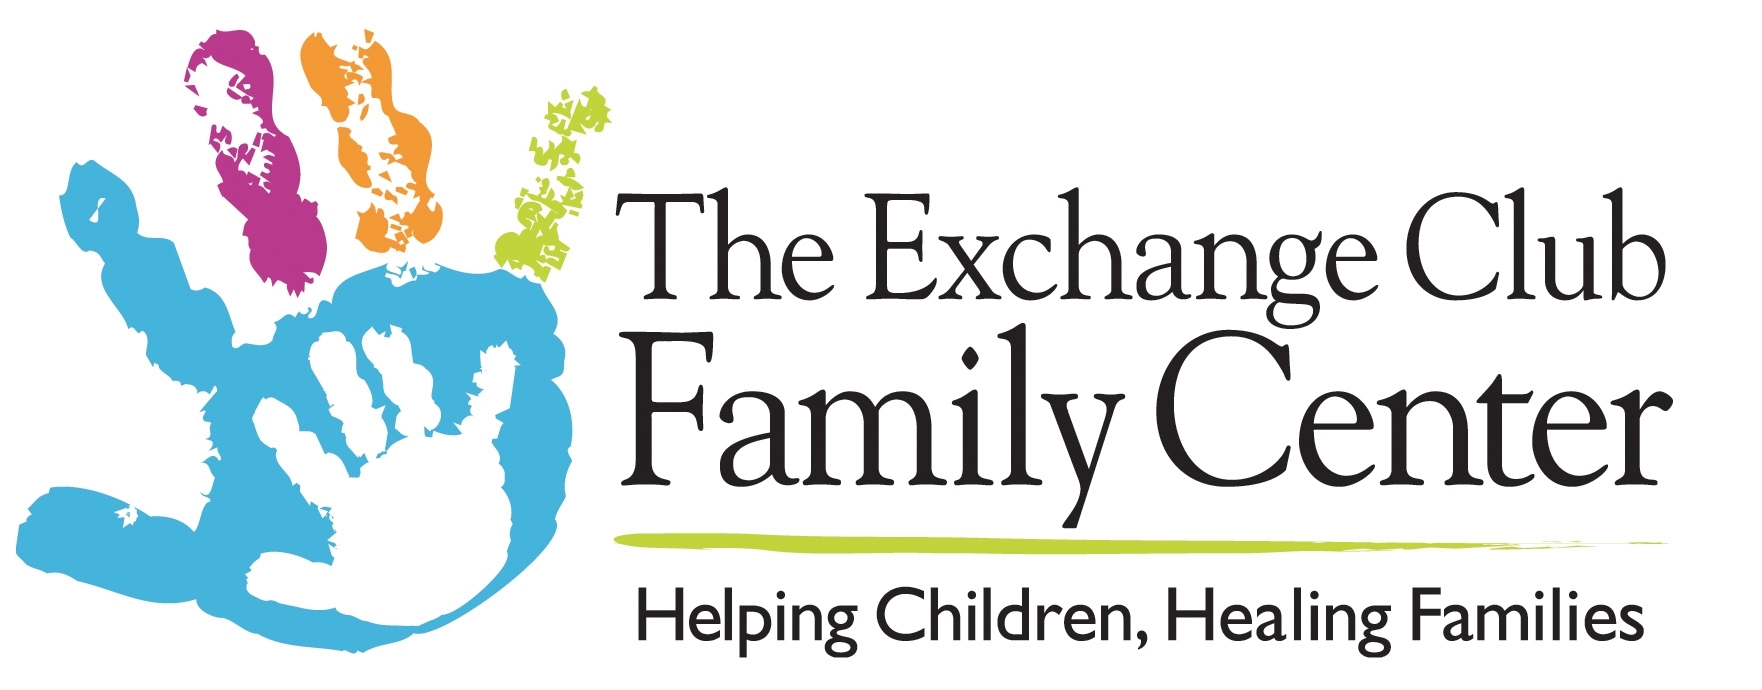 The Exchange Club Family Center Company Logo